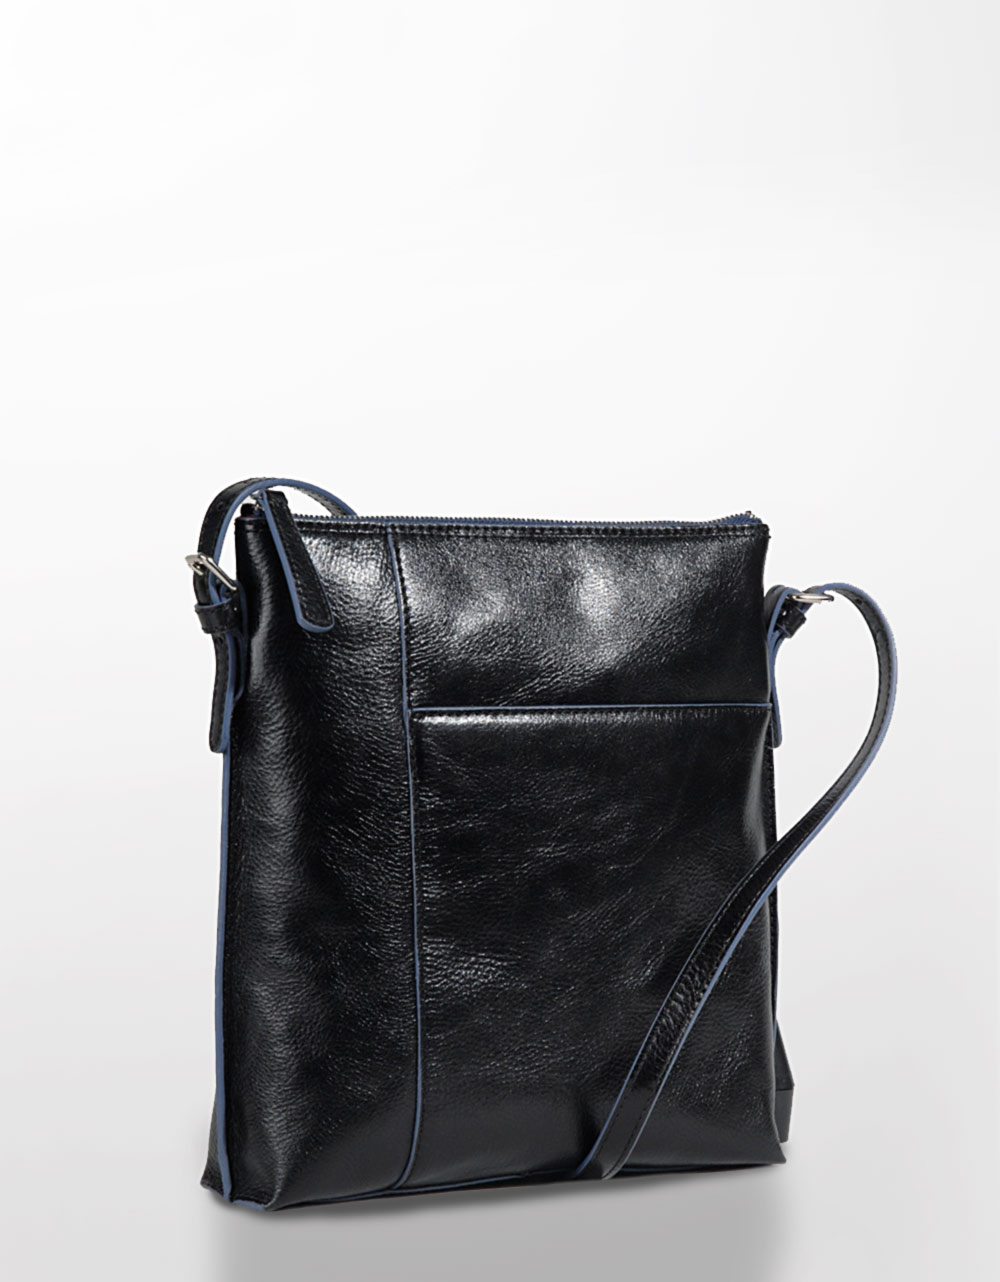 Lyst - Hobo International Alessa Leather Cross-Body Bag in Black